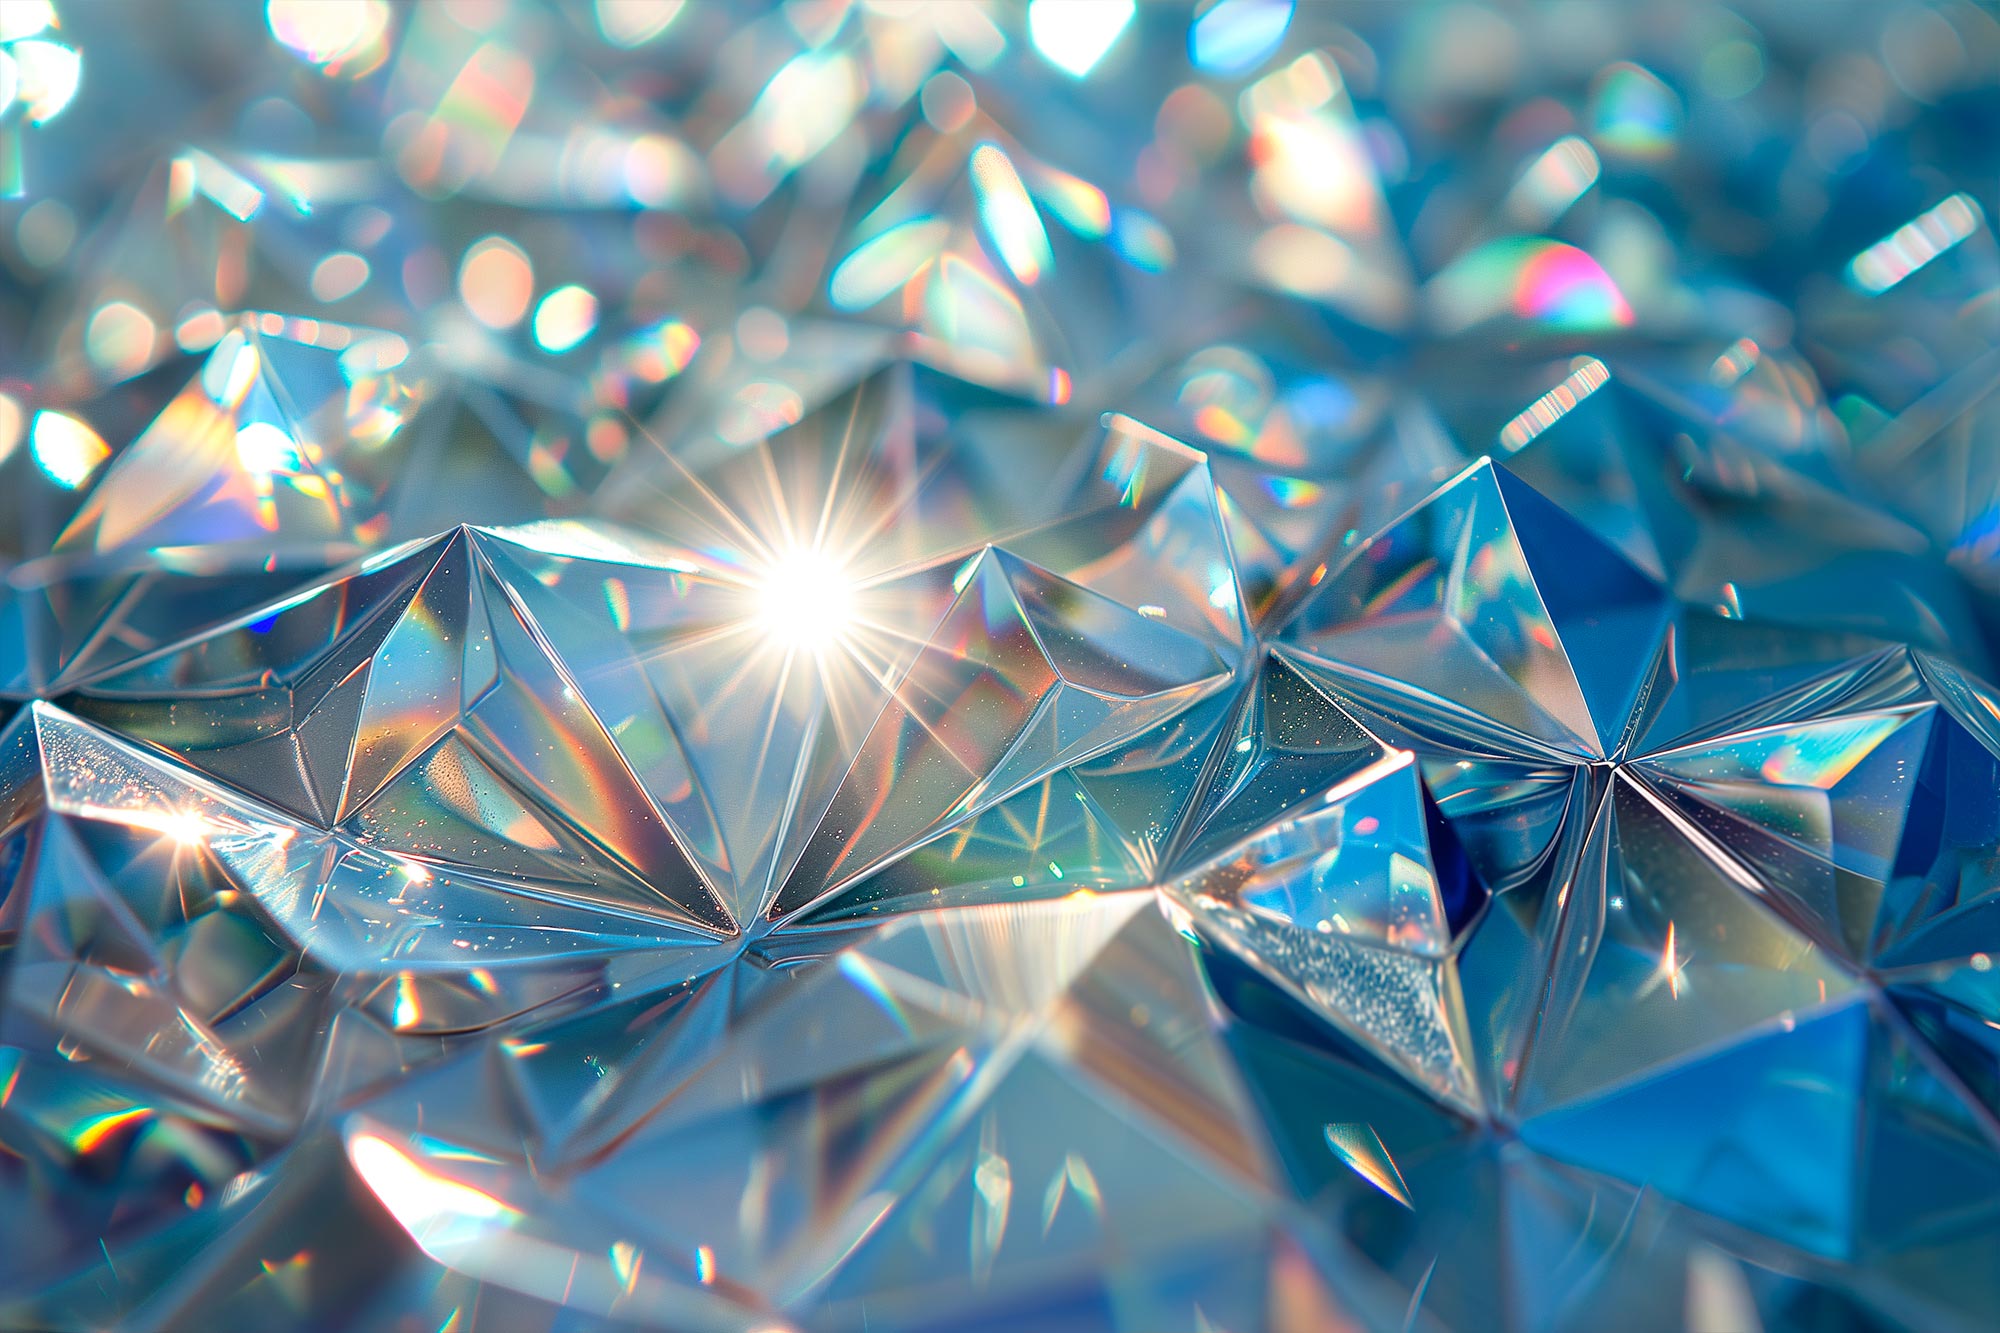 A pioneering new principle – Korean researchers have discovered a revolutionary phenomenon in liquid crystals